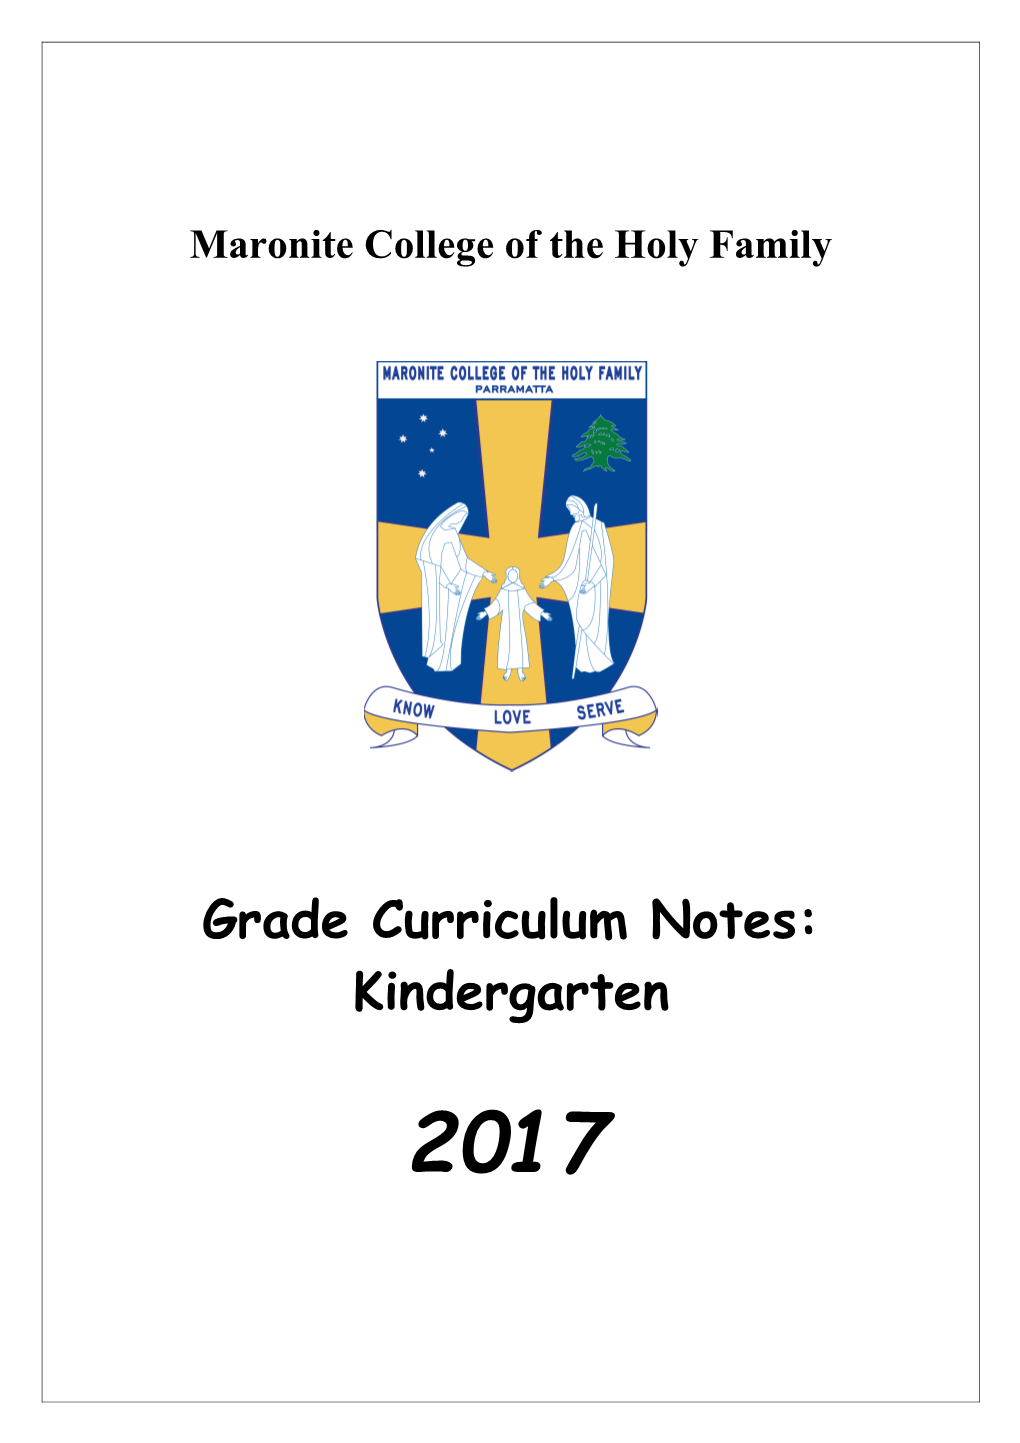 Grade Curriculum Notes: Kindergarten